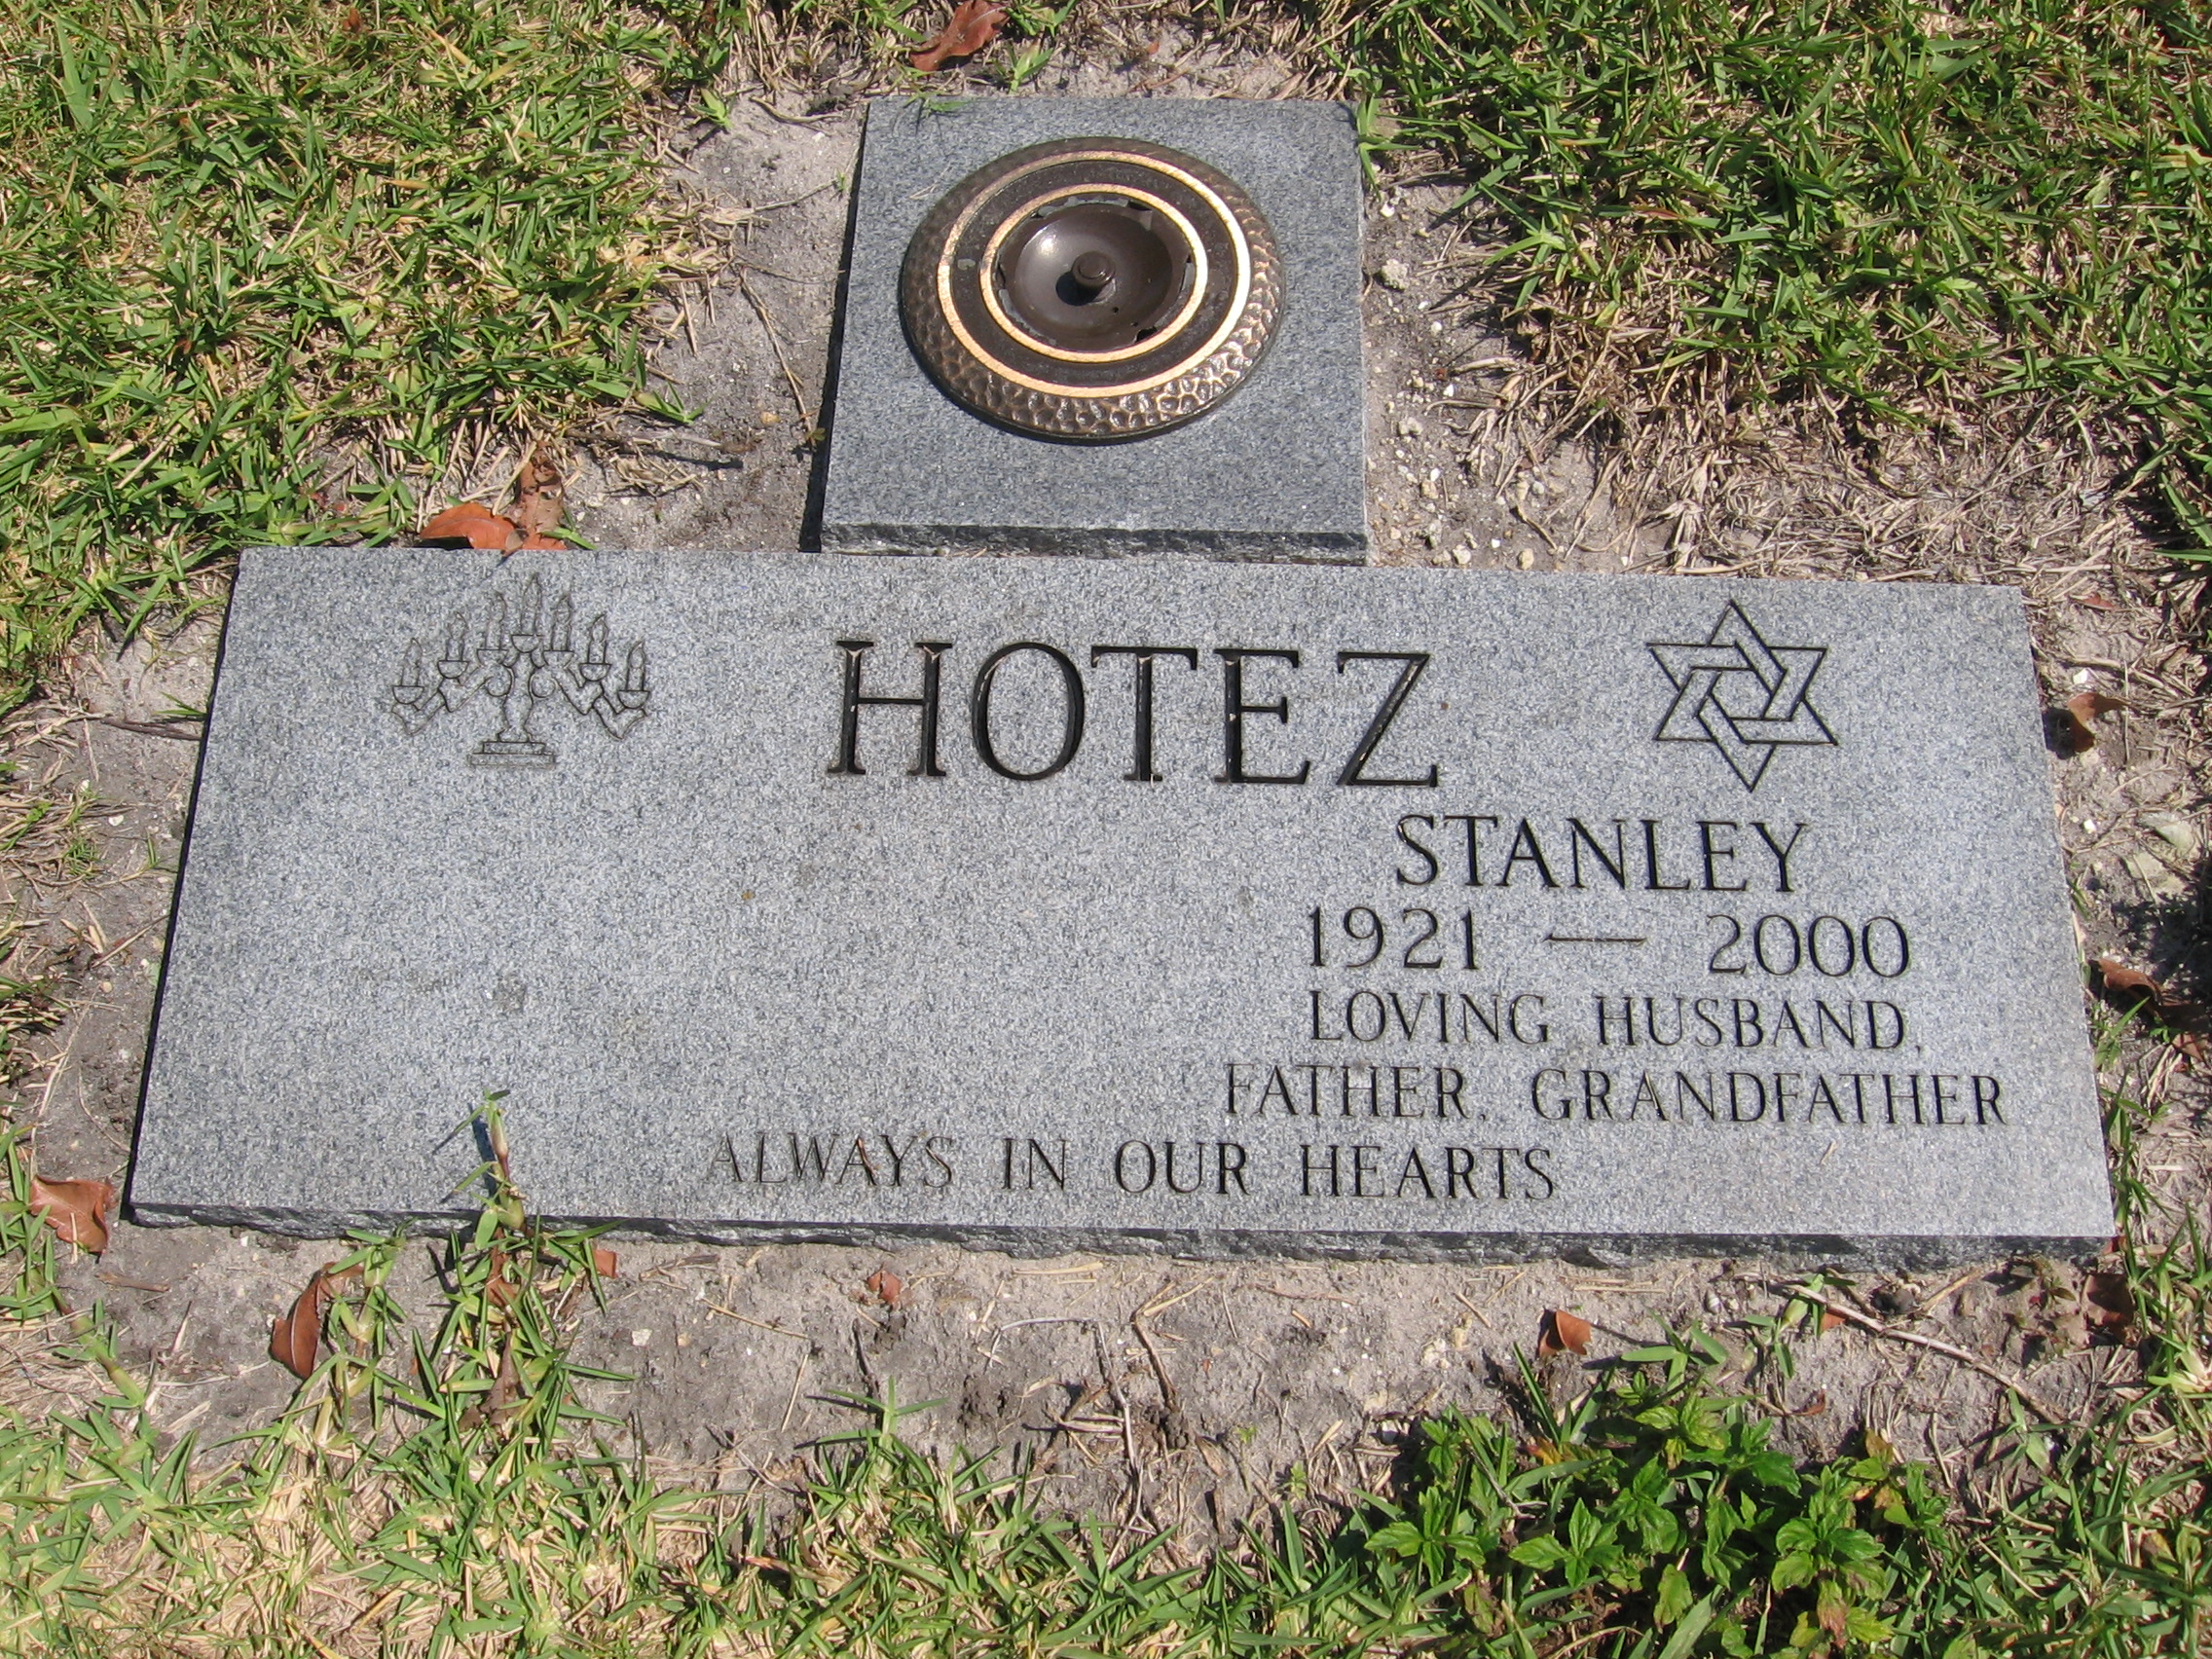 Stanley Hotez